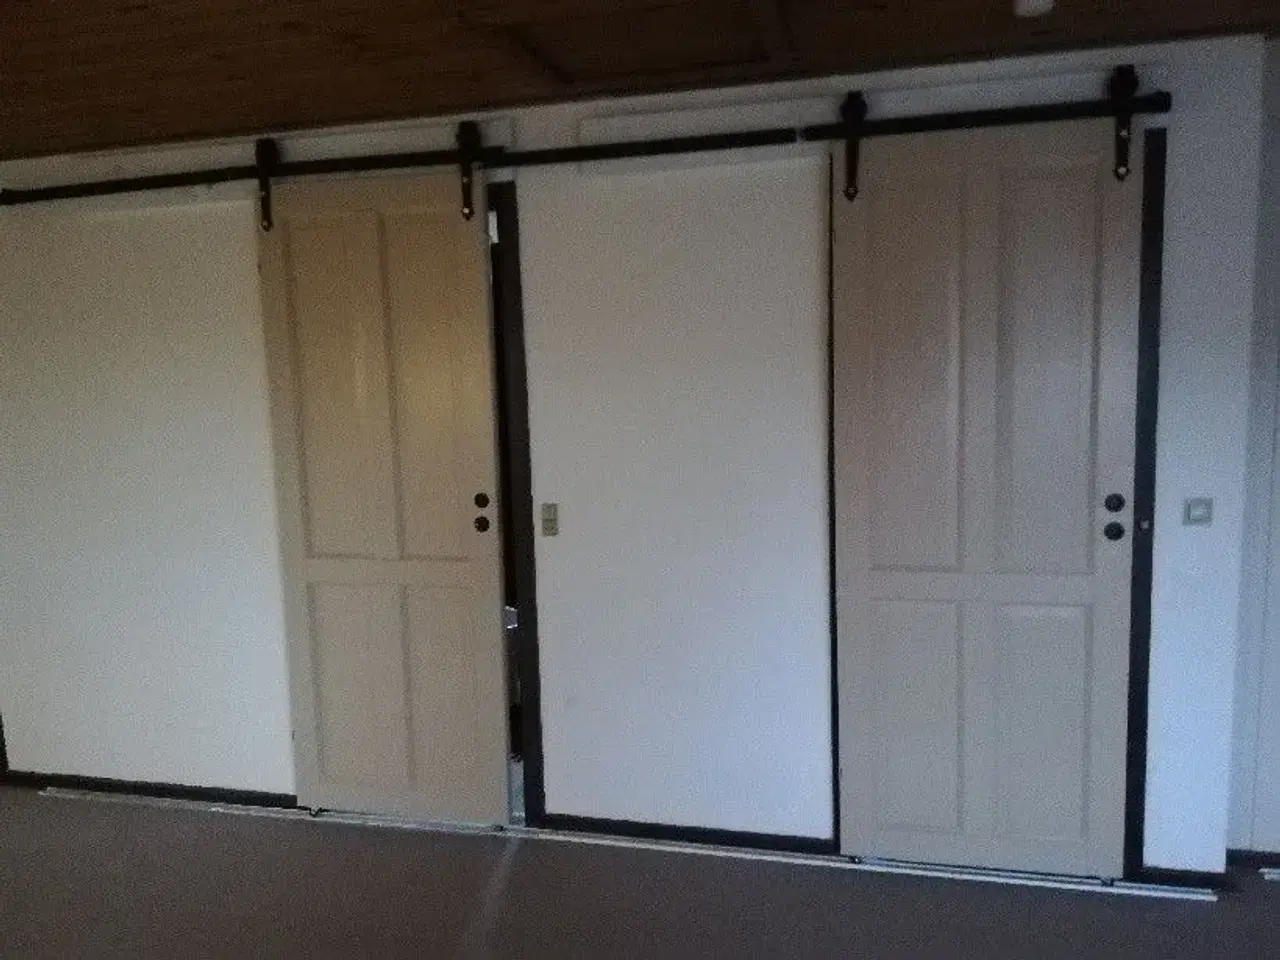 Billede 1 - 3 dannebrog døre